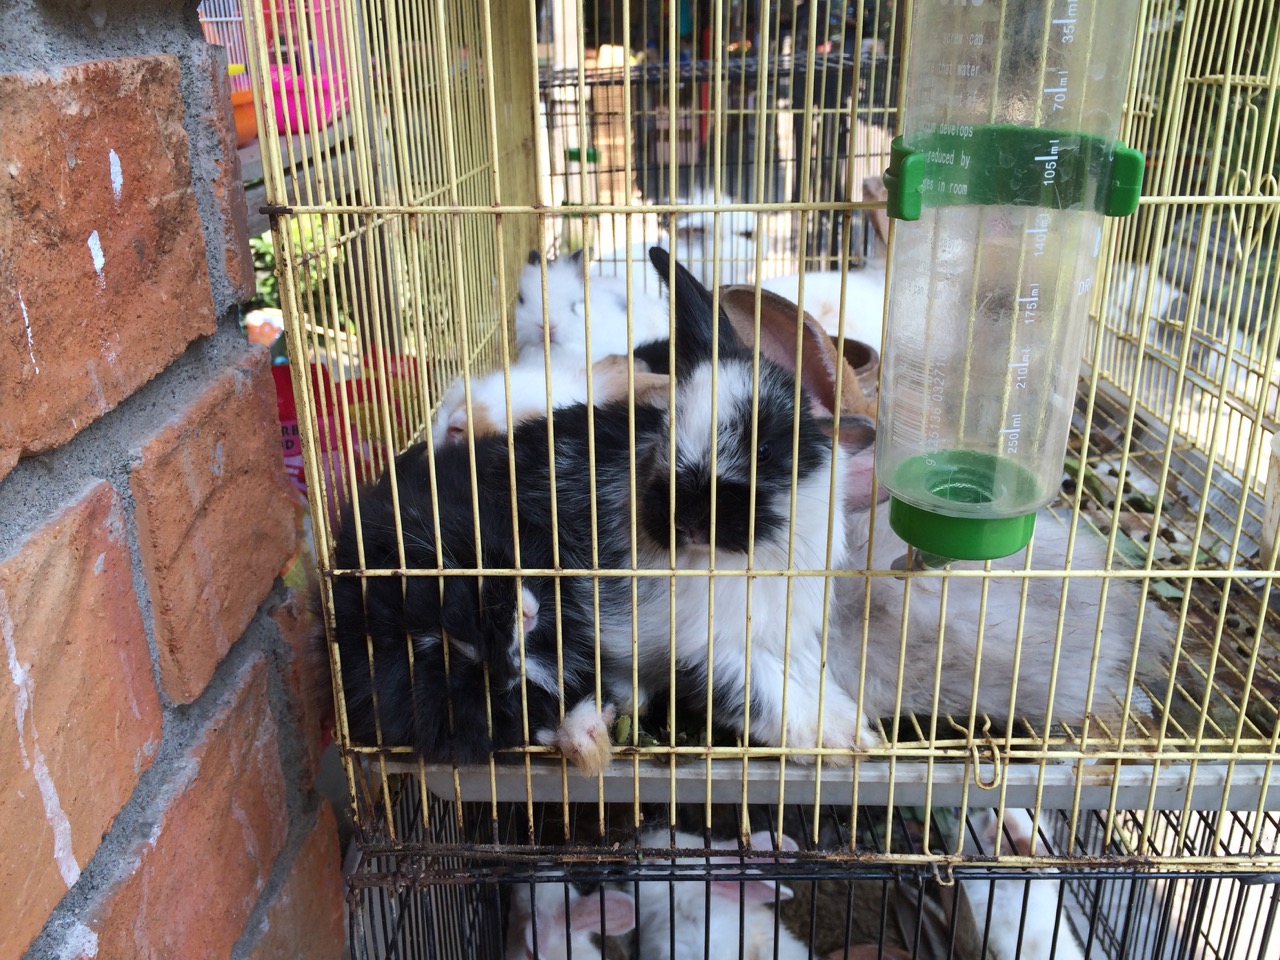 Caged rabbits